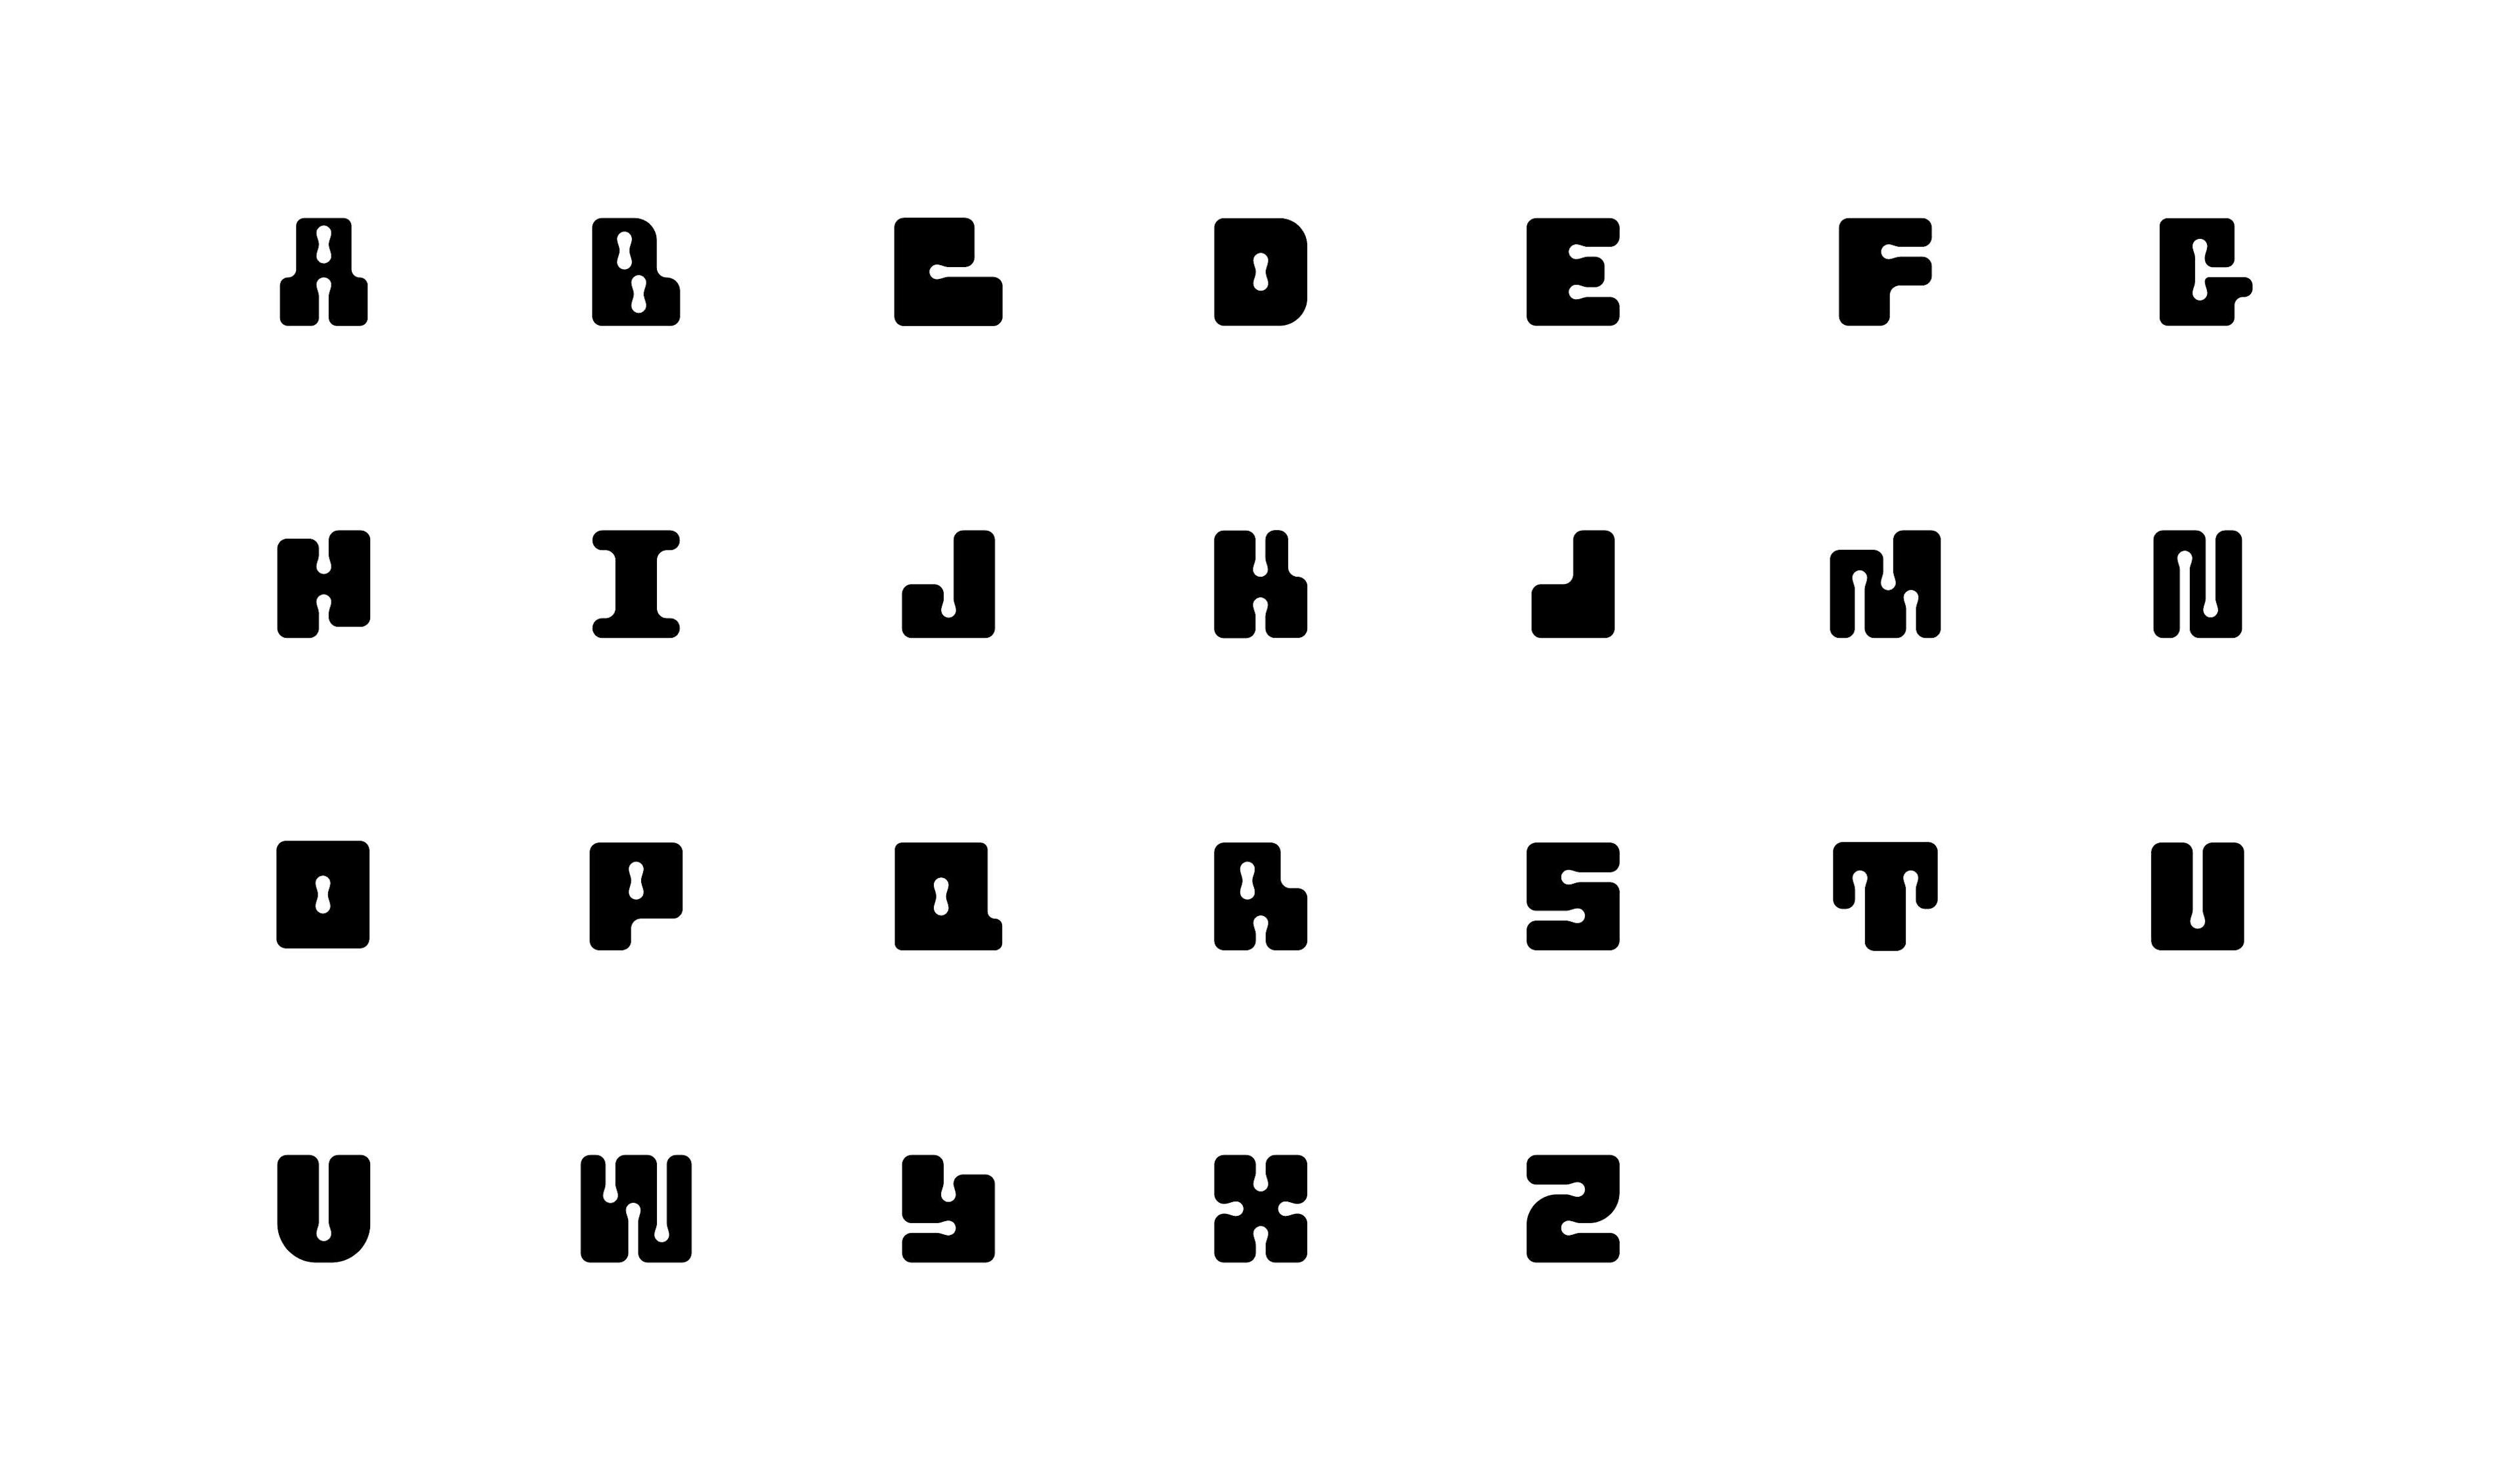 Mulu alphabets in full set